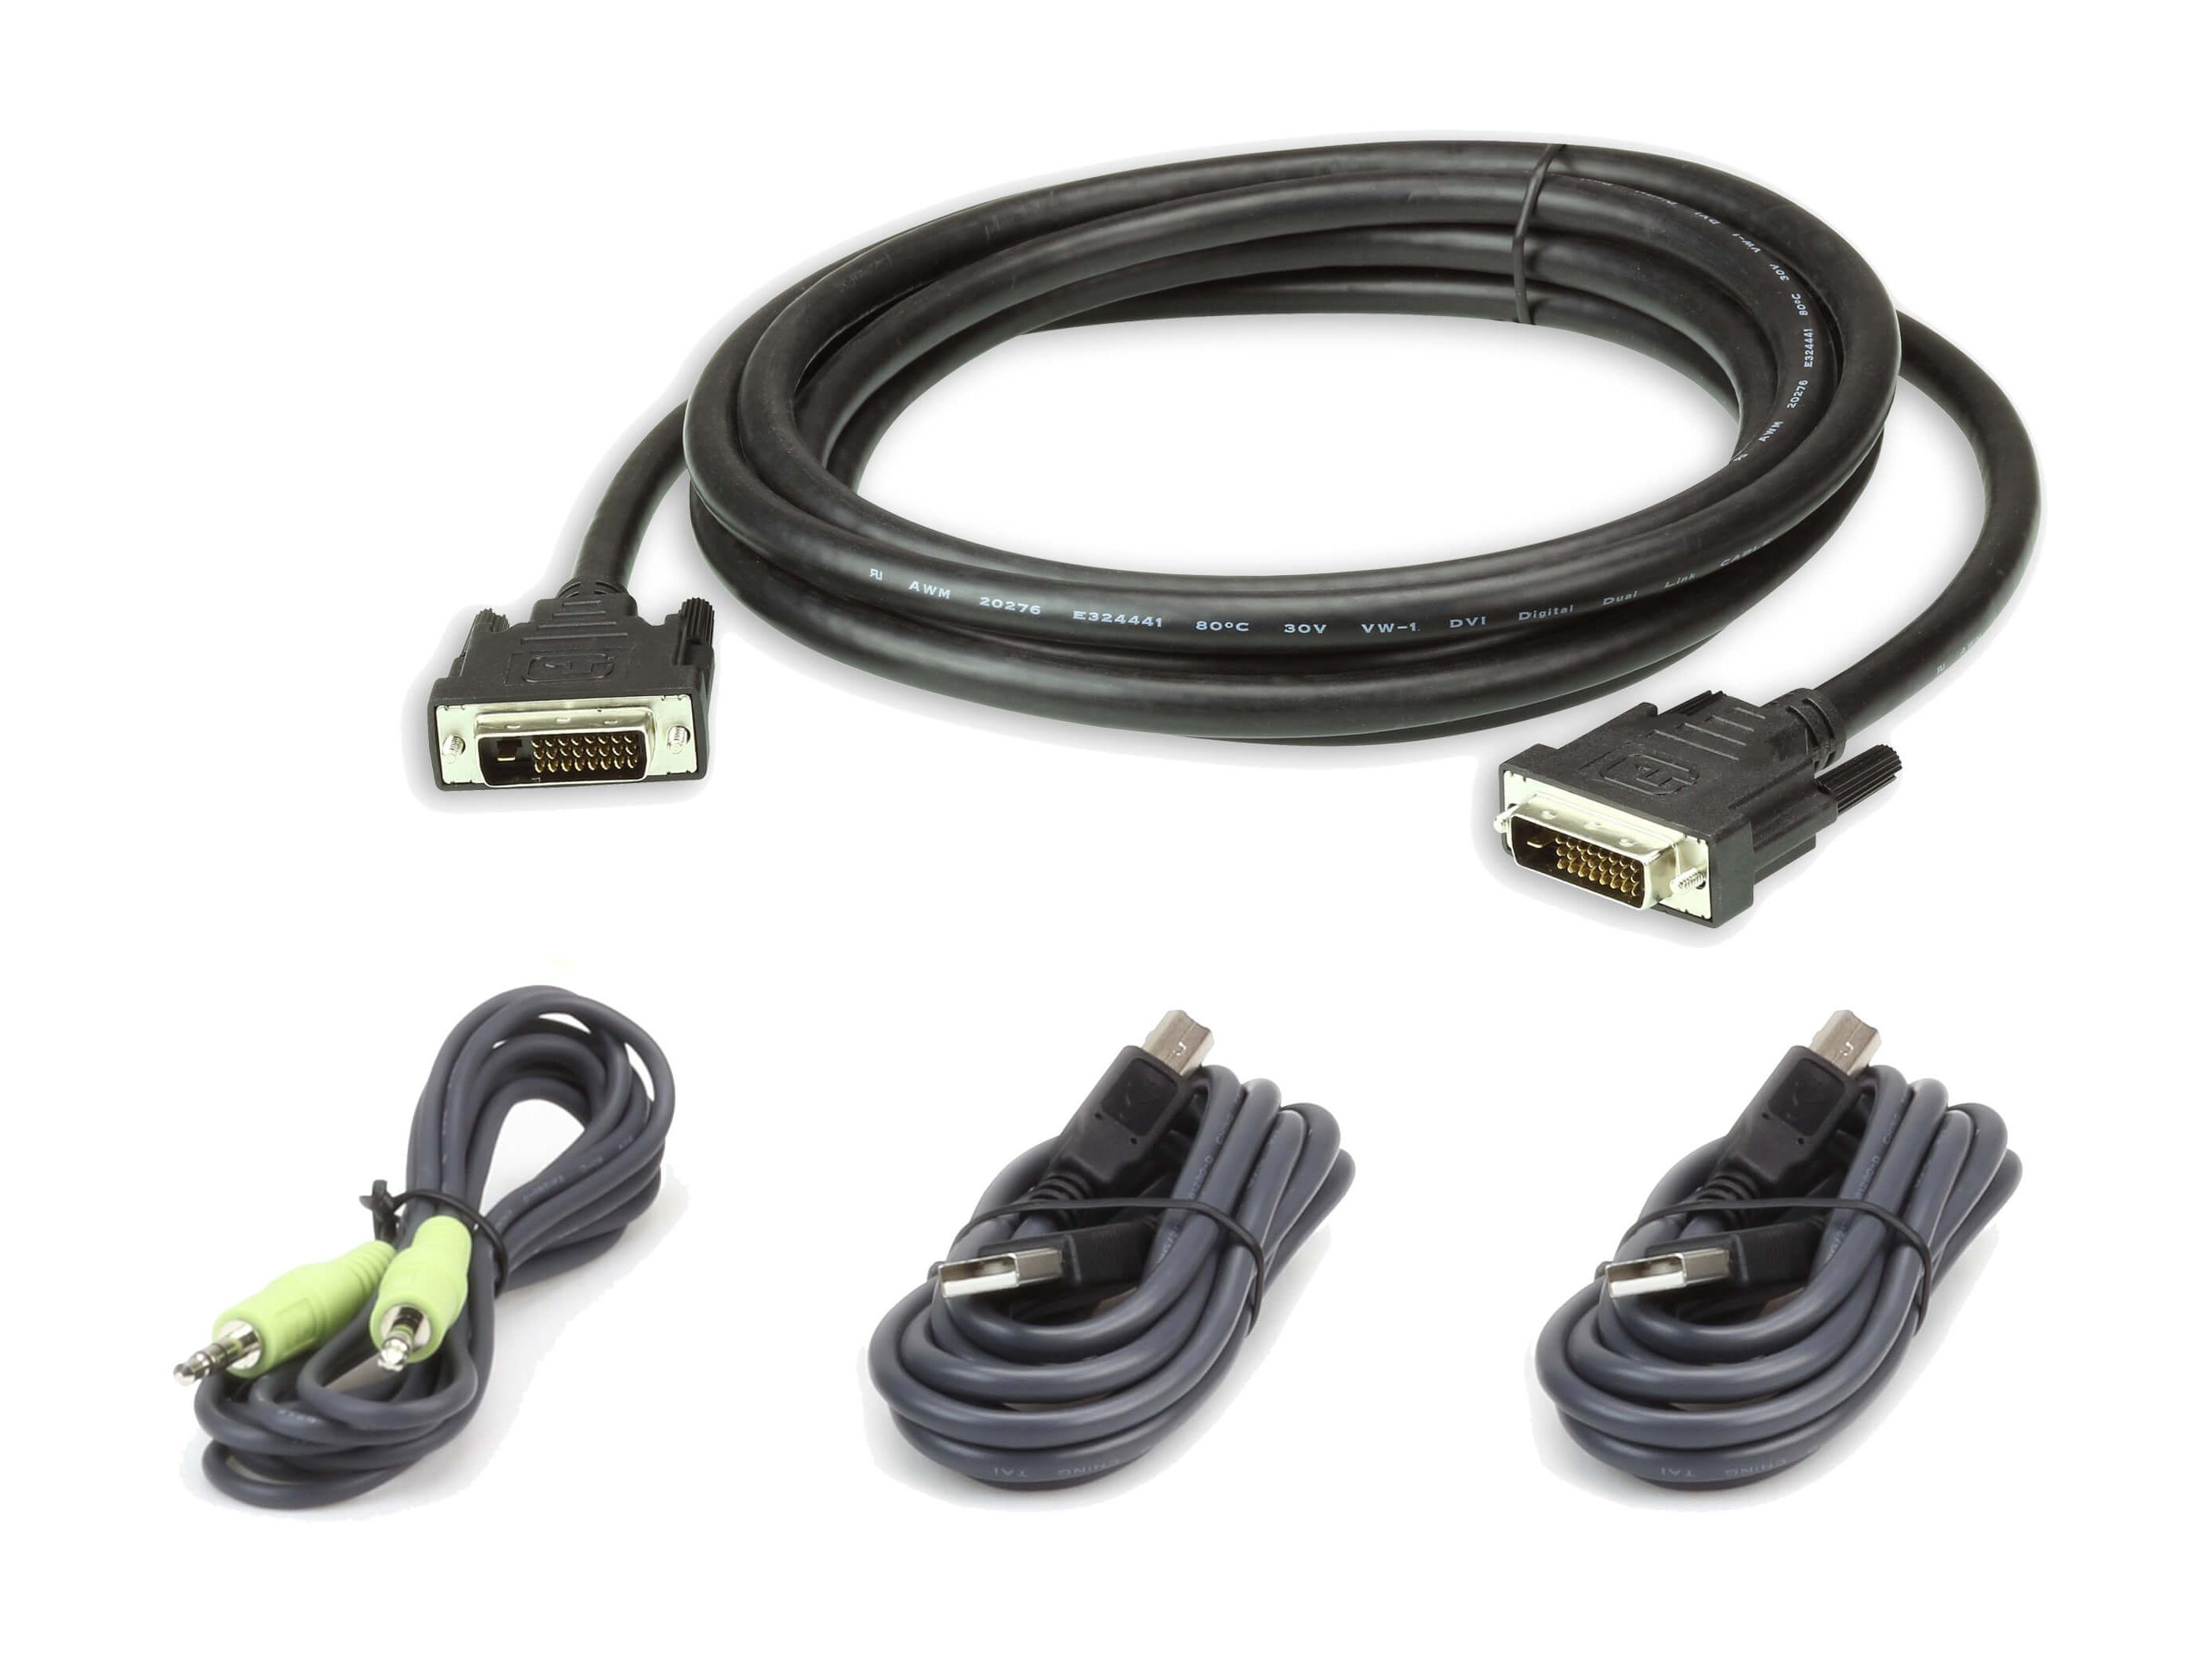 2L7D03UDX4 10ft Single Display DVI-D Secure KVM Cable Kit by Aten